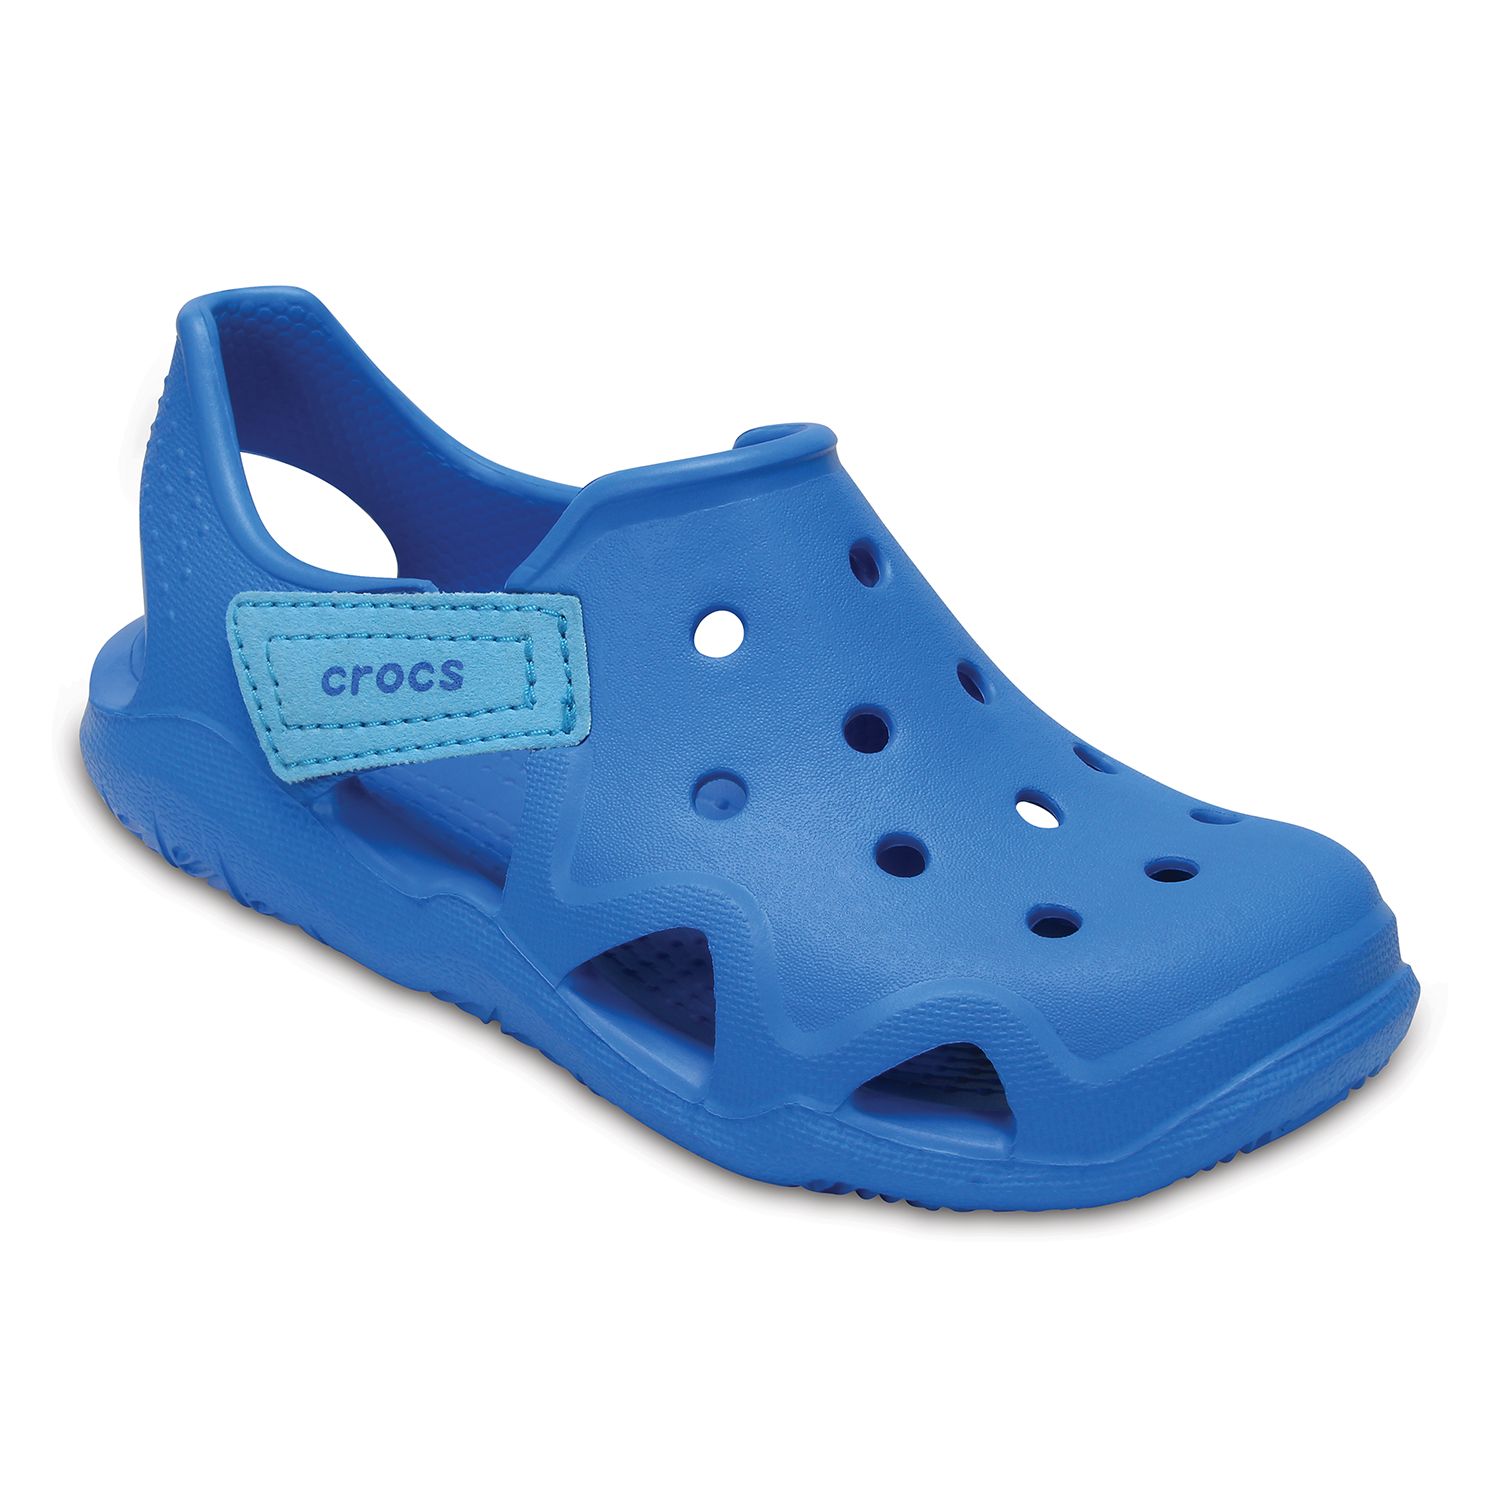 wave crocs